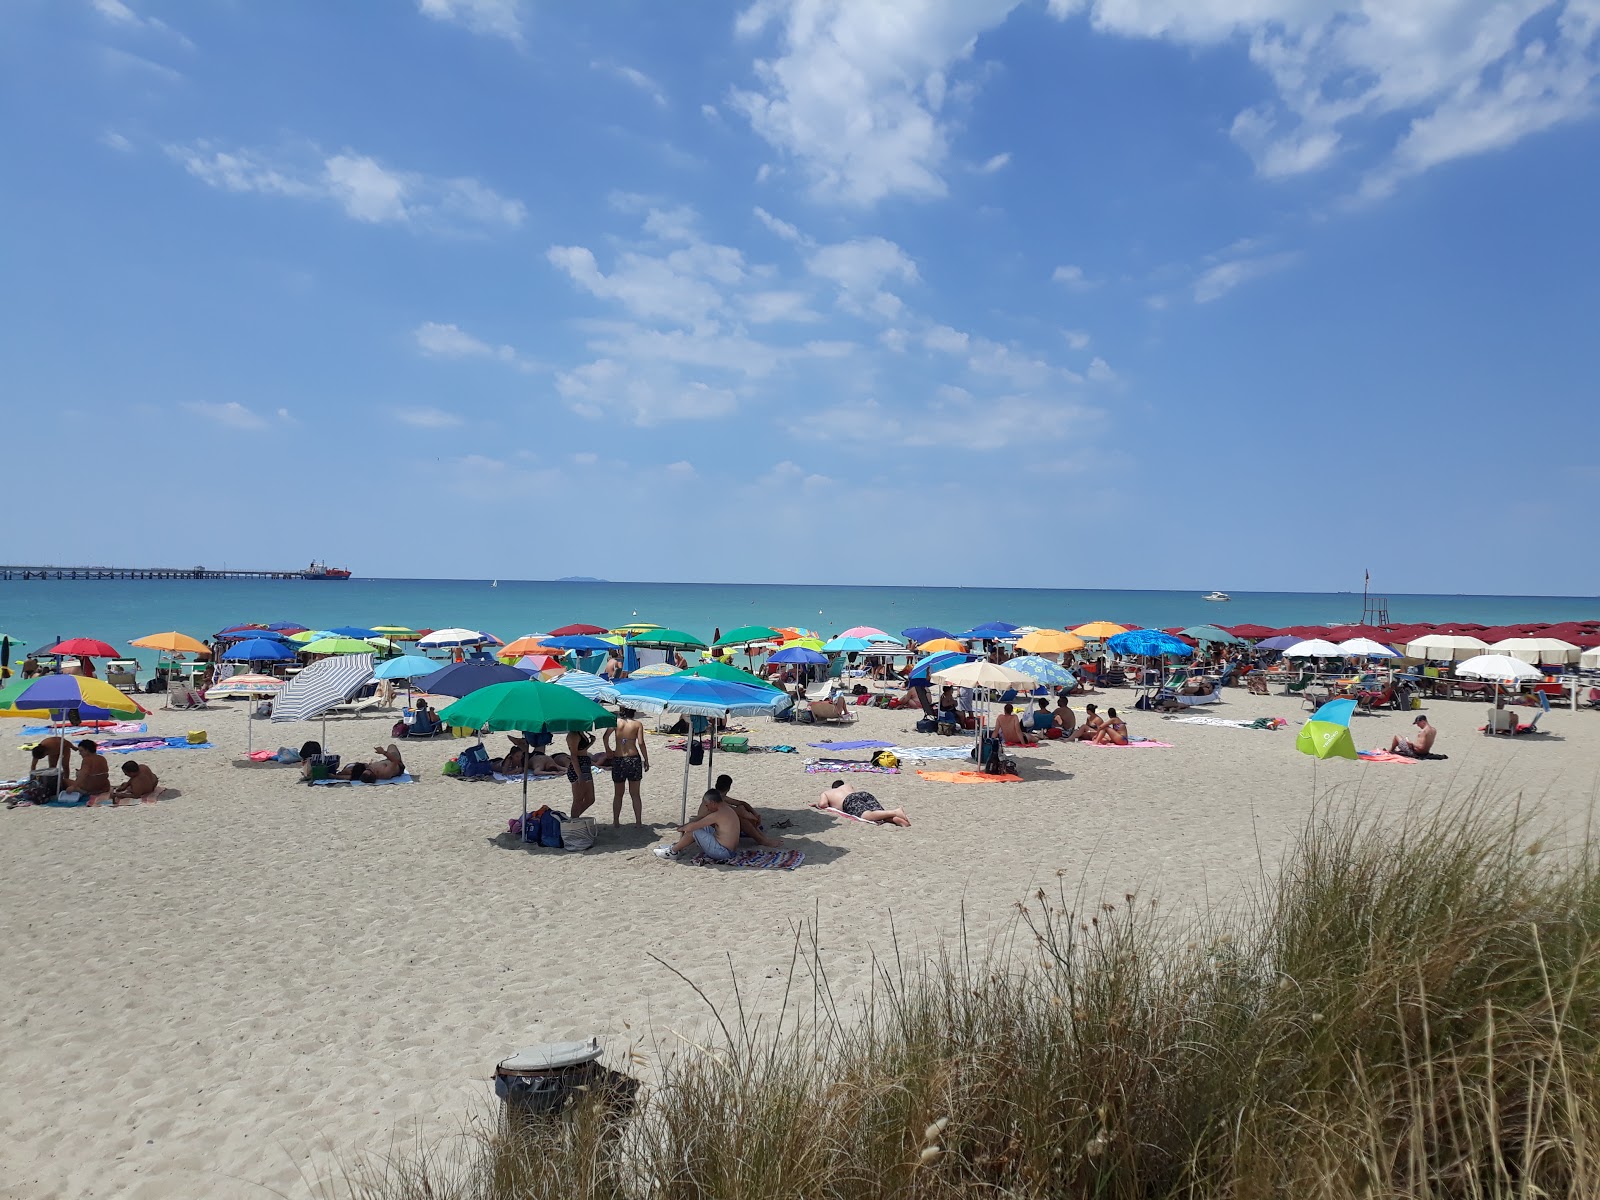 Fotografija Spiaggia Pietrabianca nahaja se v naravnem okolju